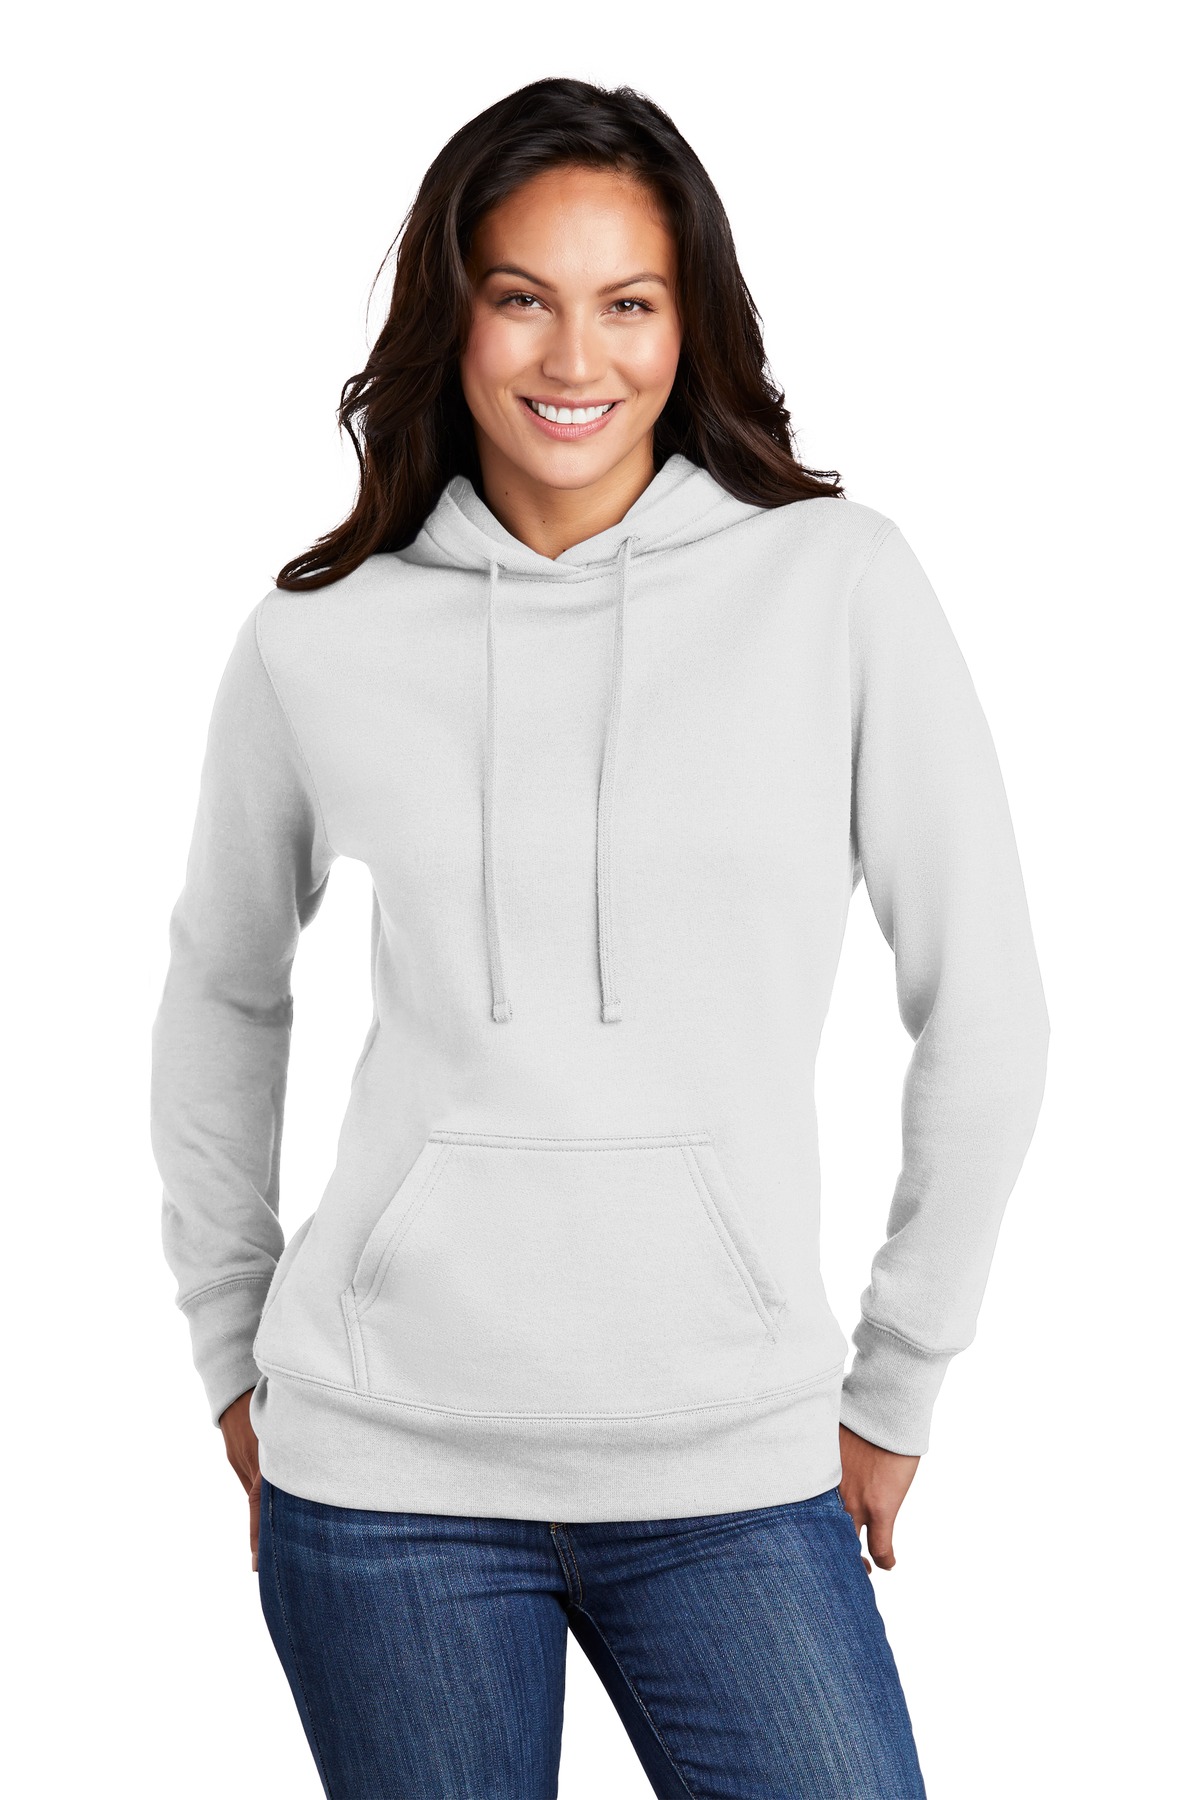 Port &#38; Company Ladies Core Fleece Pullover Hooded Sweatshirt-Port & Company